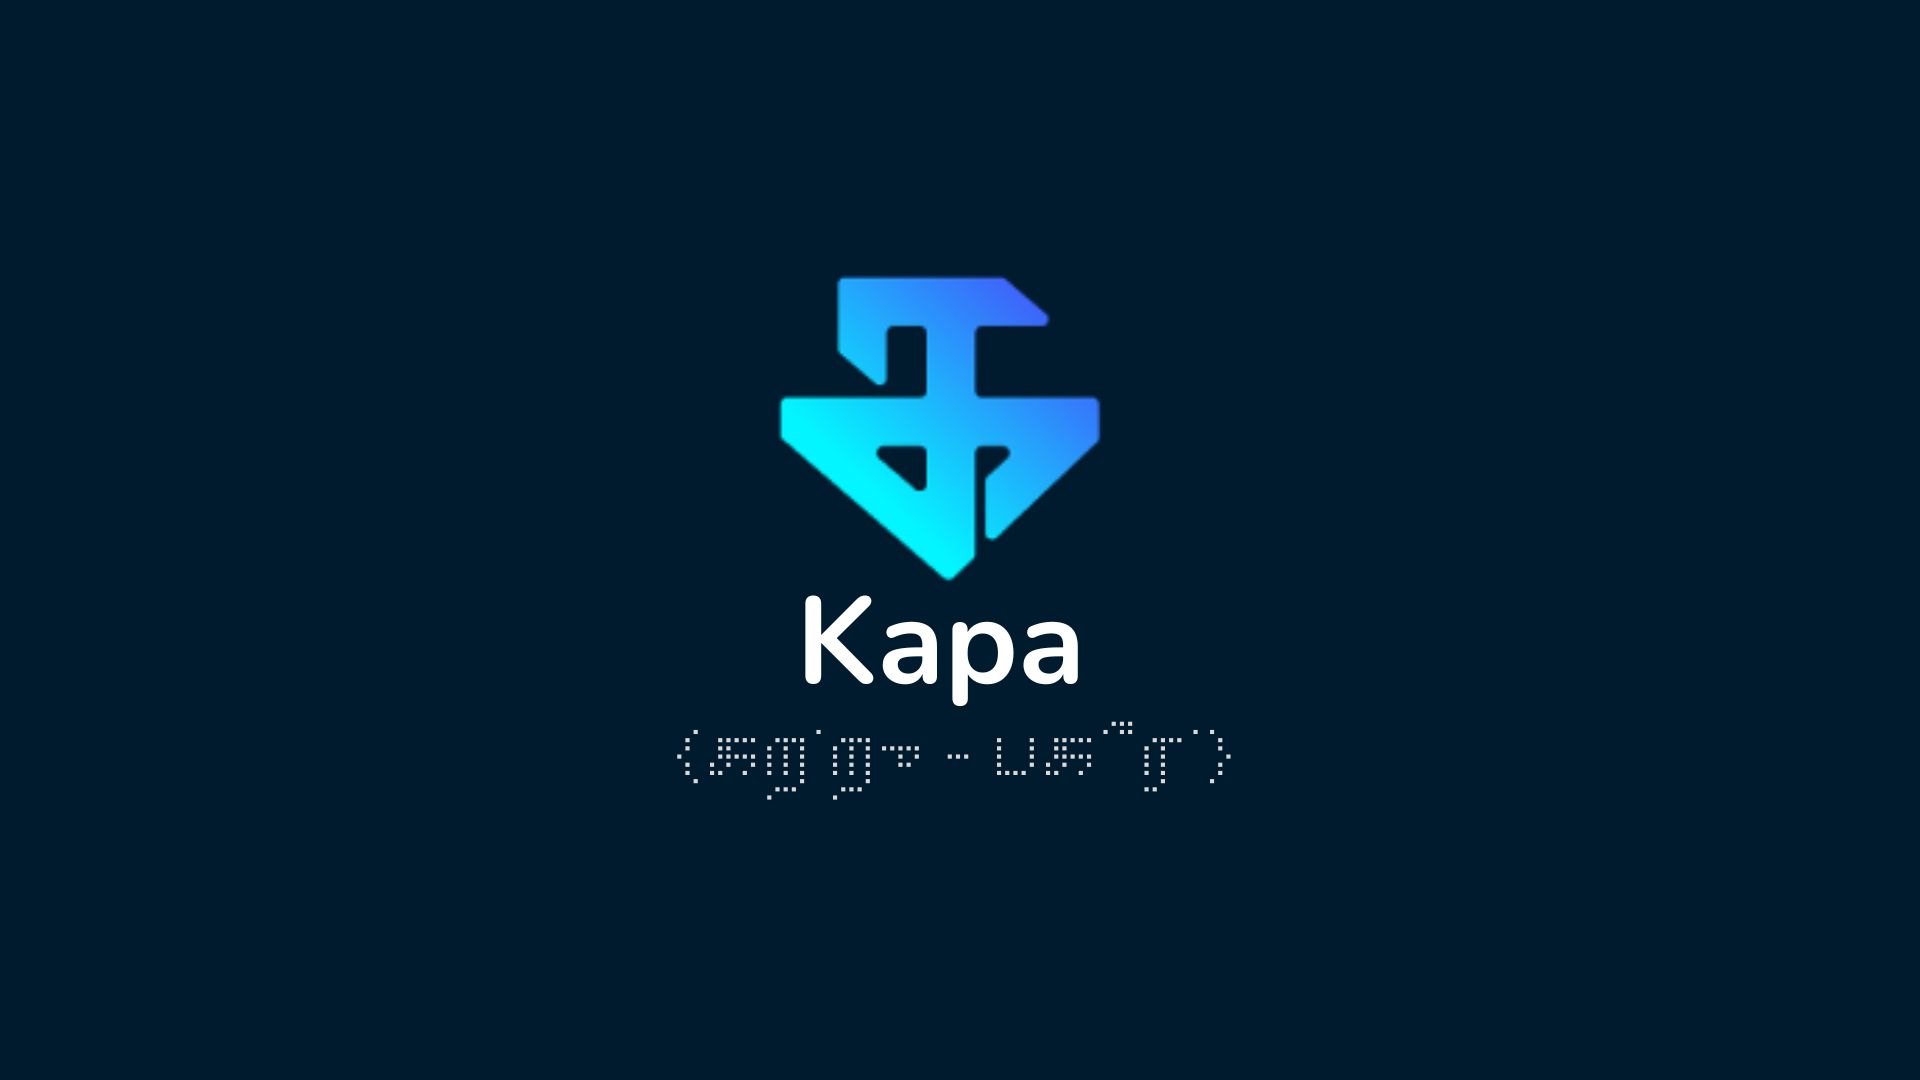 Kapa (காபா)